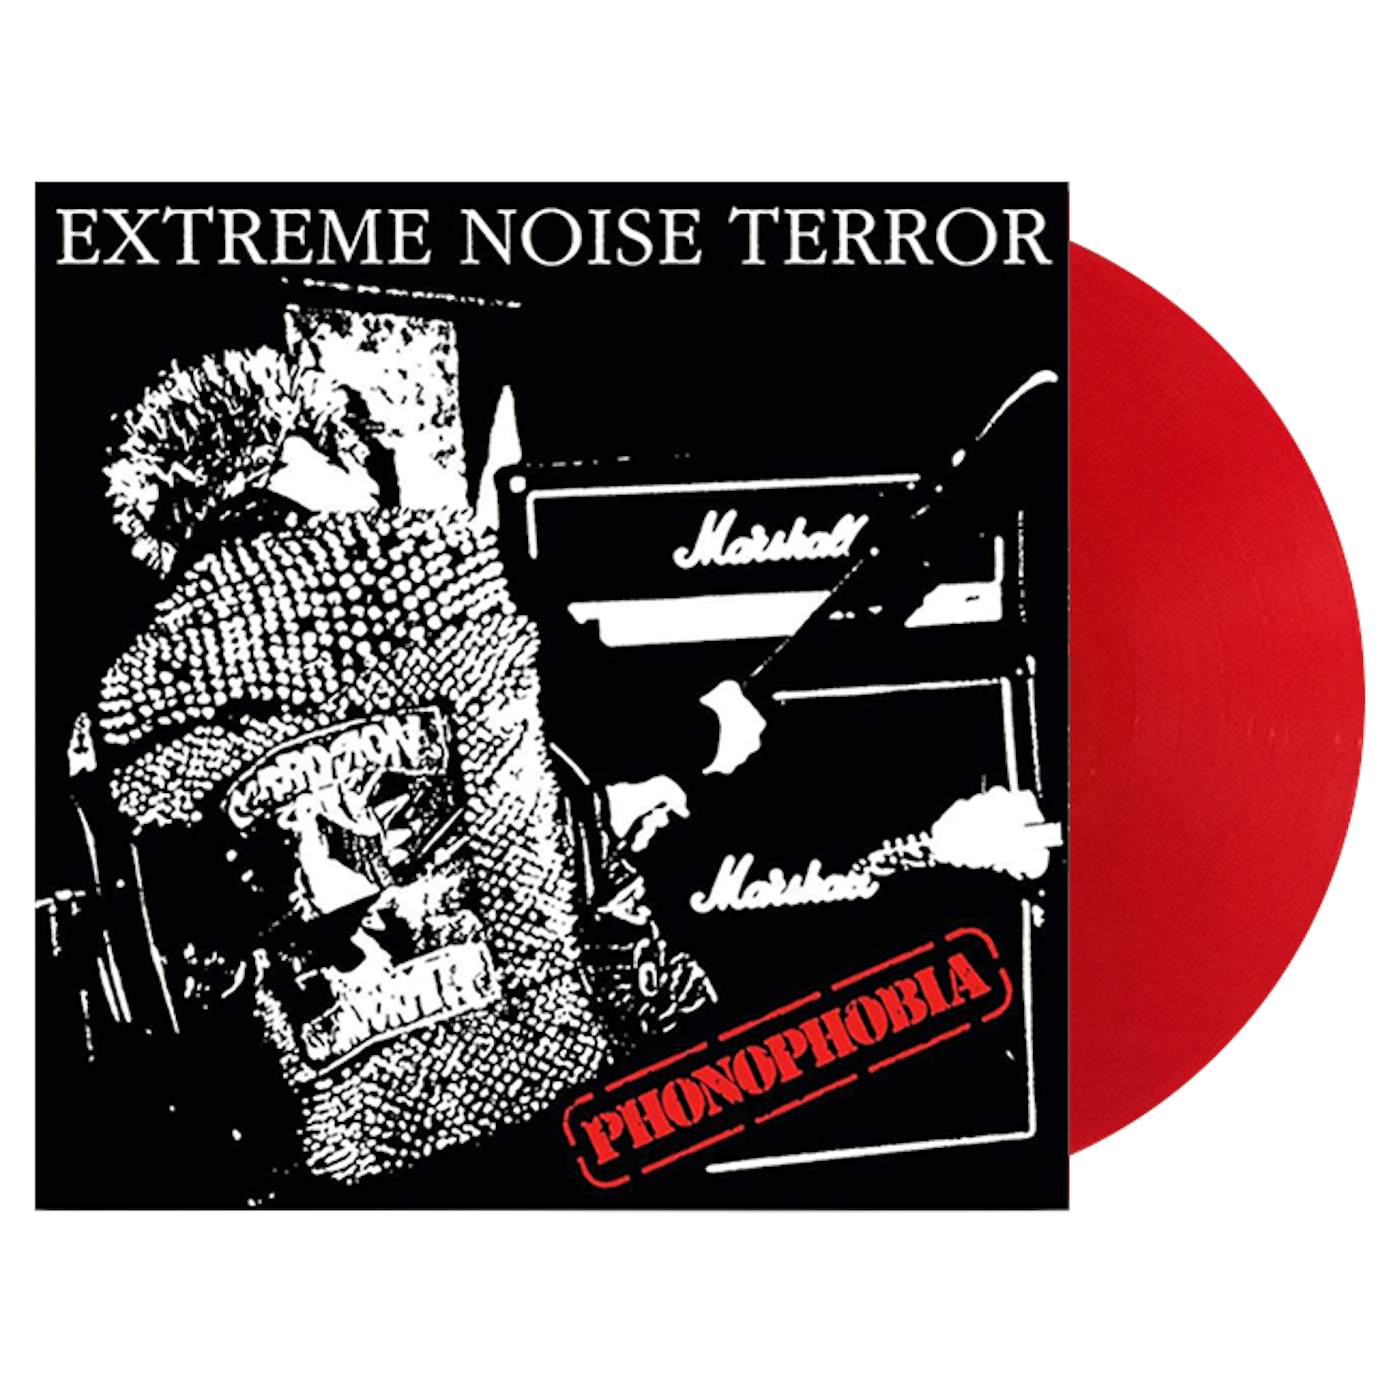 EXTREME NOISE TERROR - 'Phonophobia' 2xLP (Vinyl)